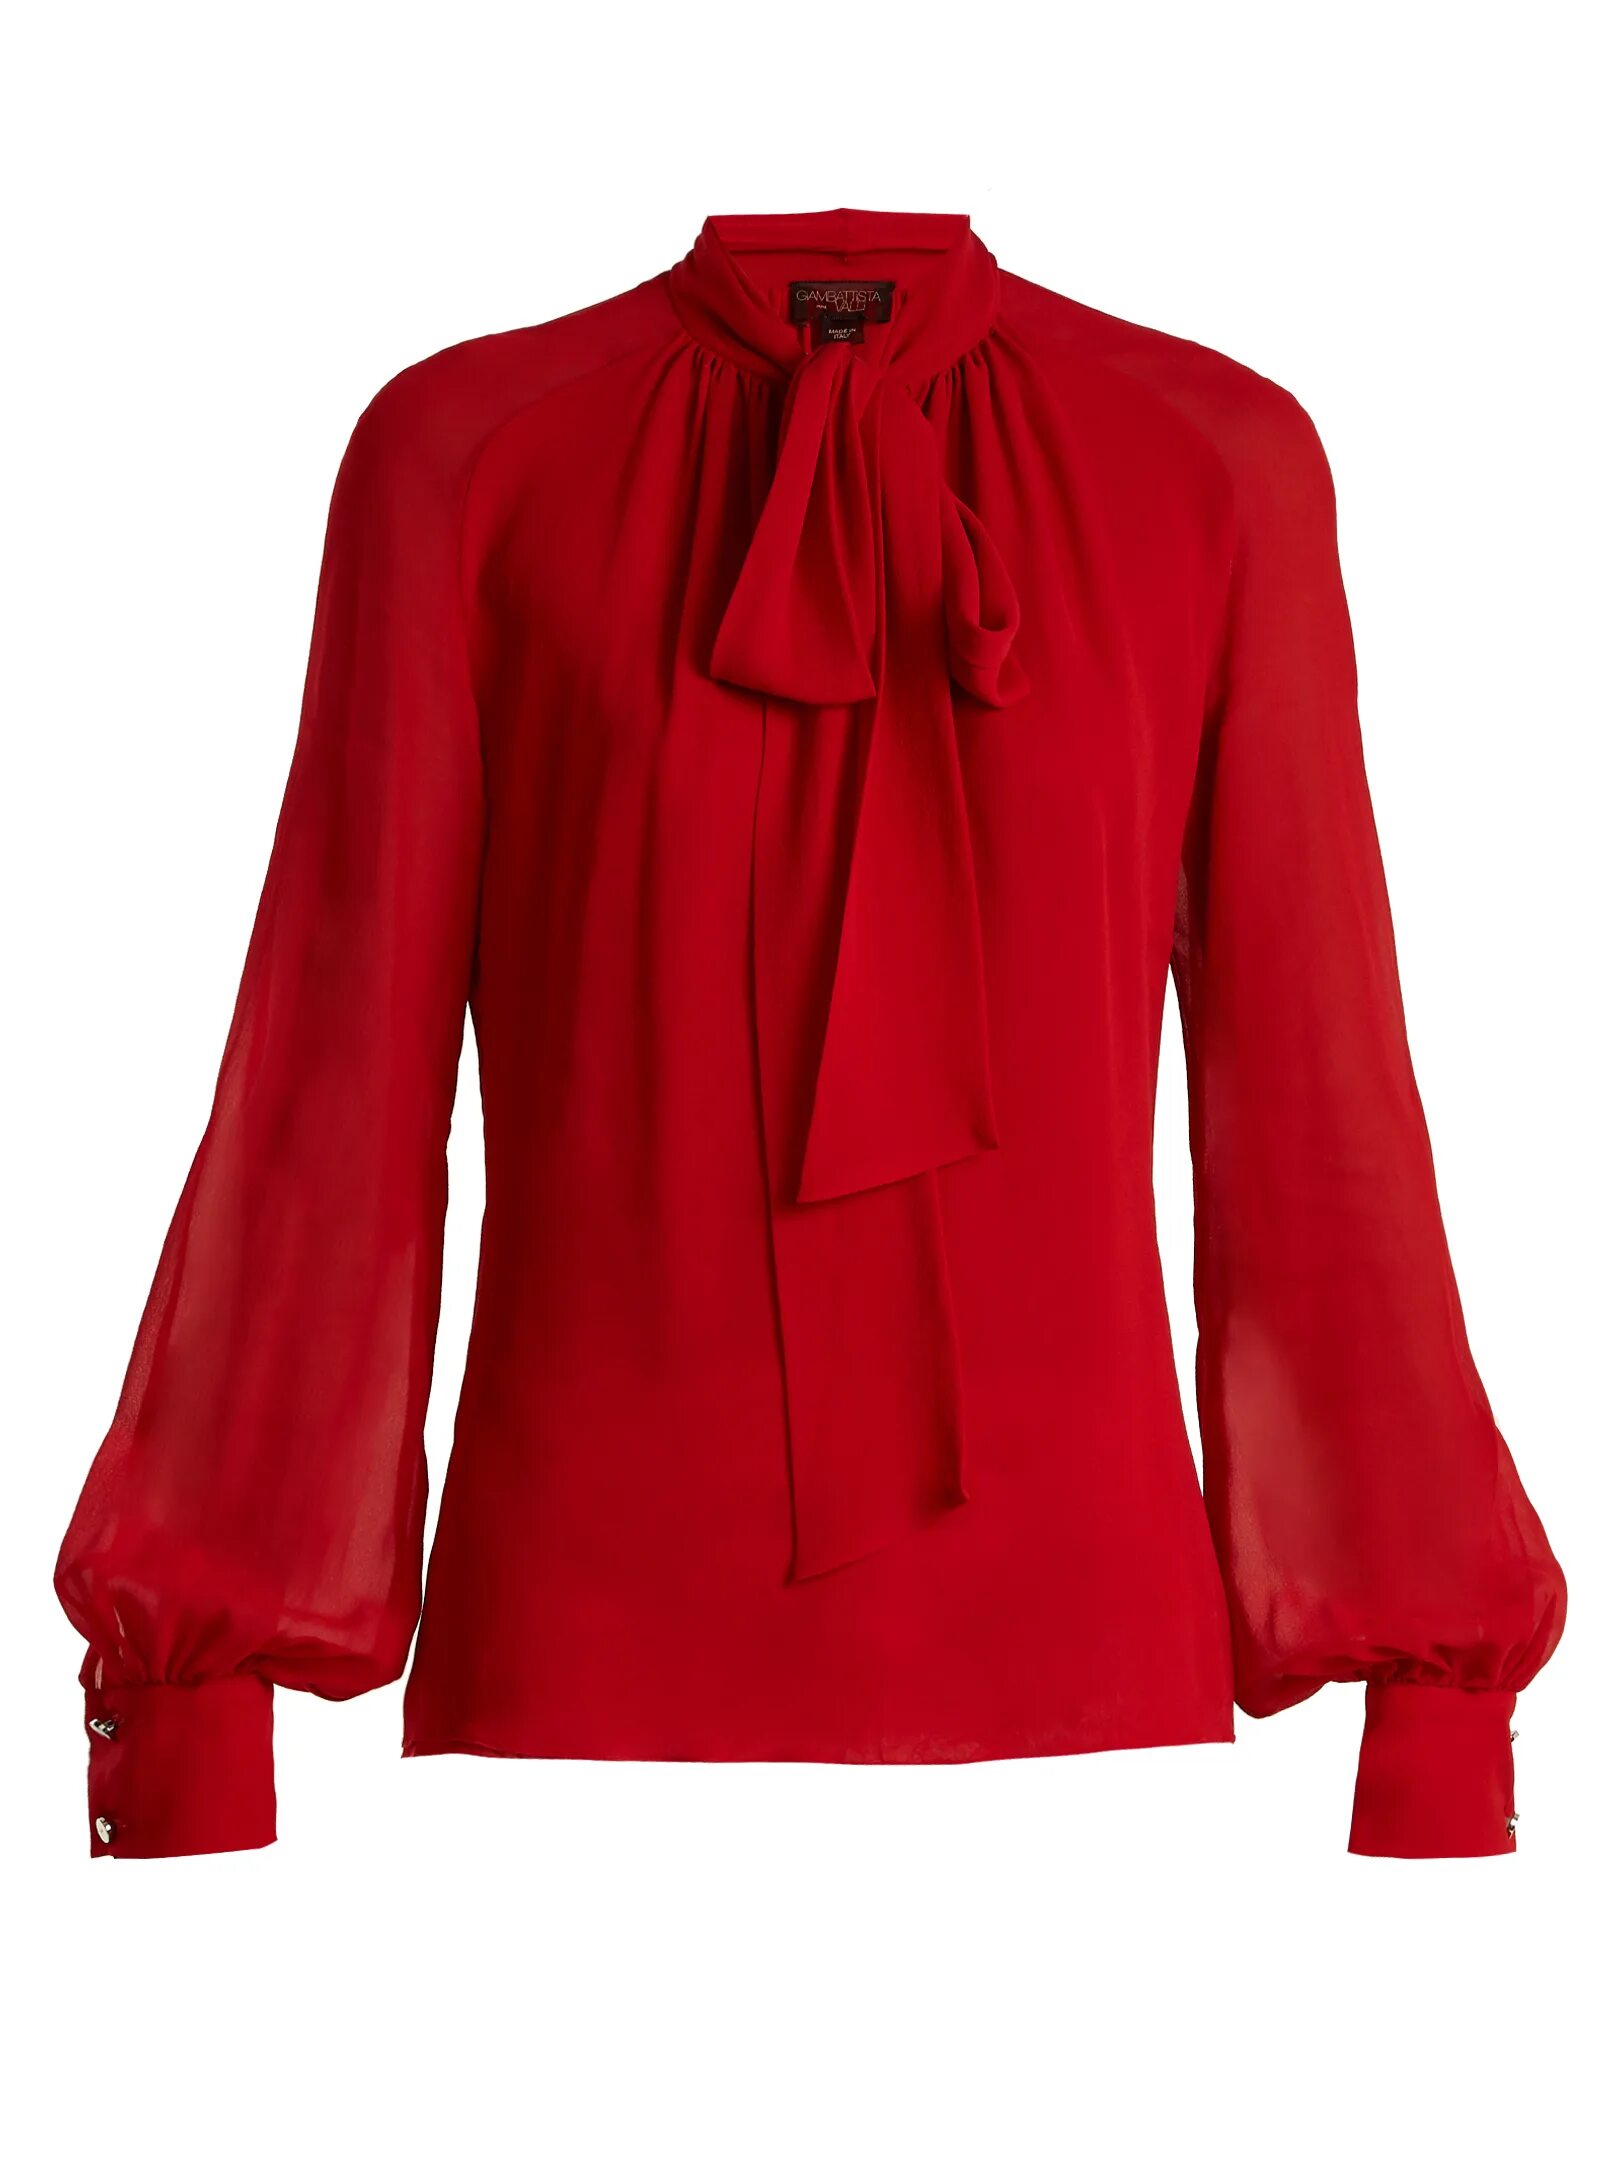 Блузки красного цвета. Красная блуза. Красная нарядная блузка. Красная кофточка. Красная блузка с длинным рукавом.